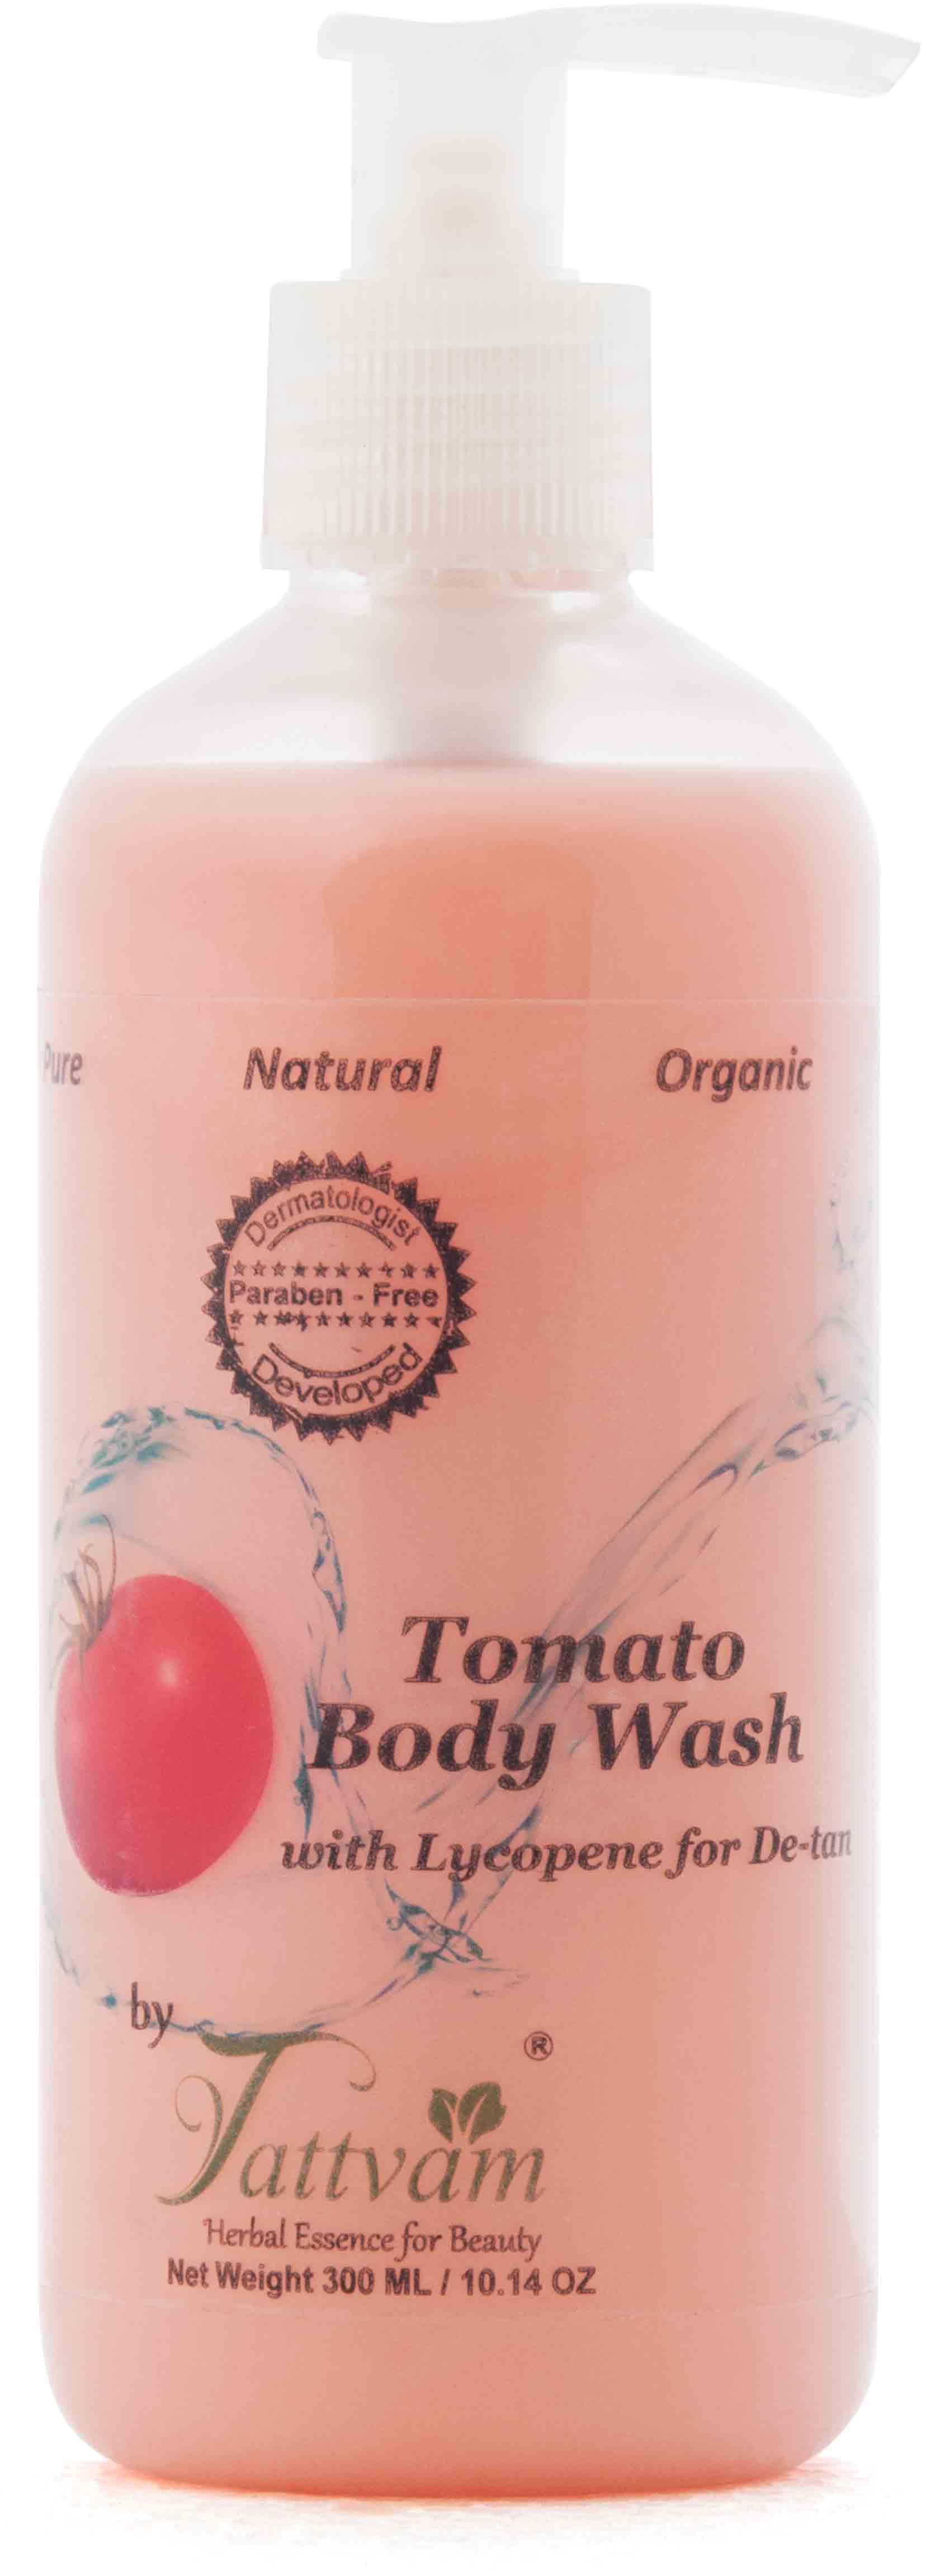 Tomato Body Wash